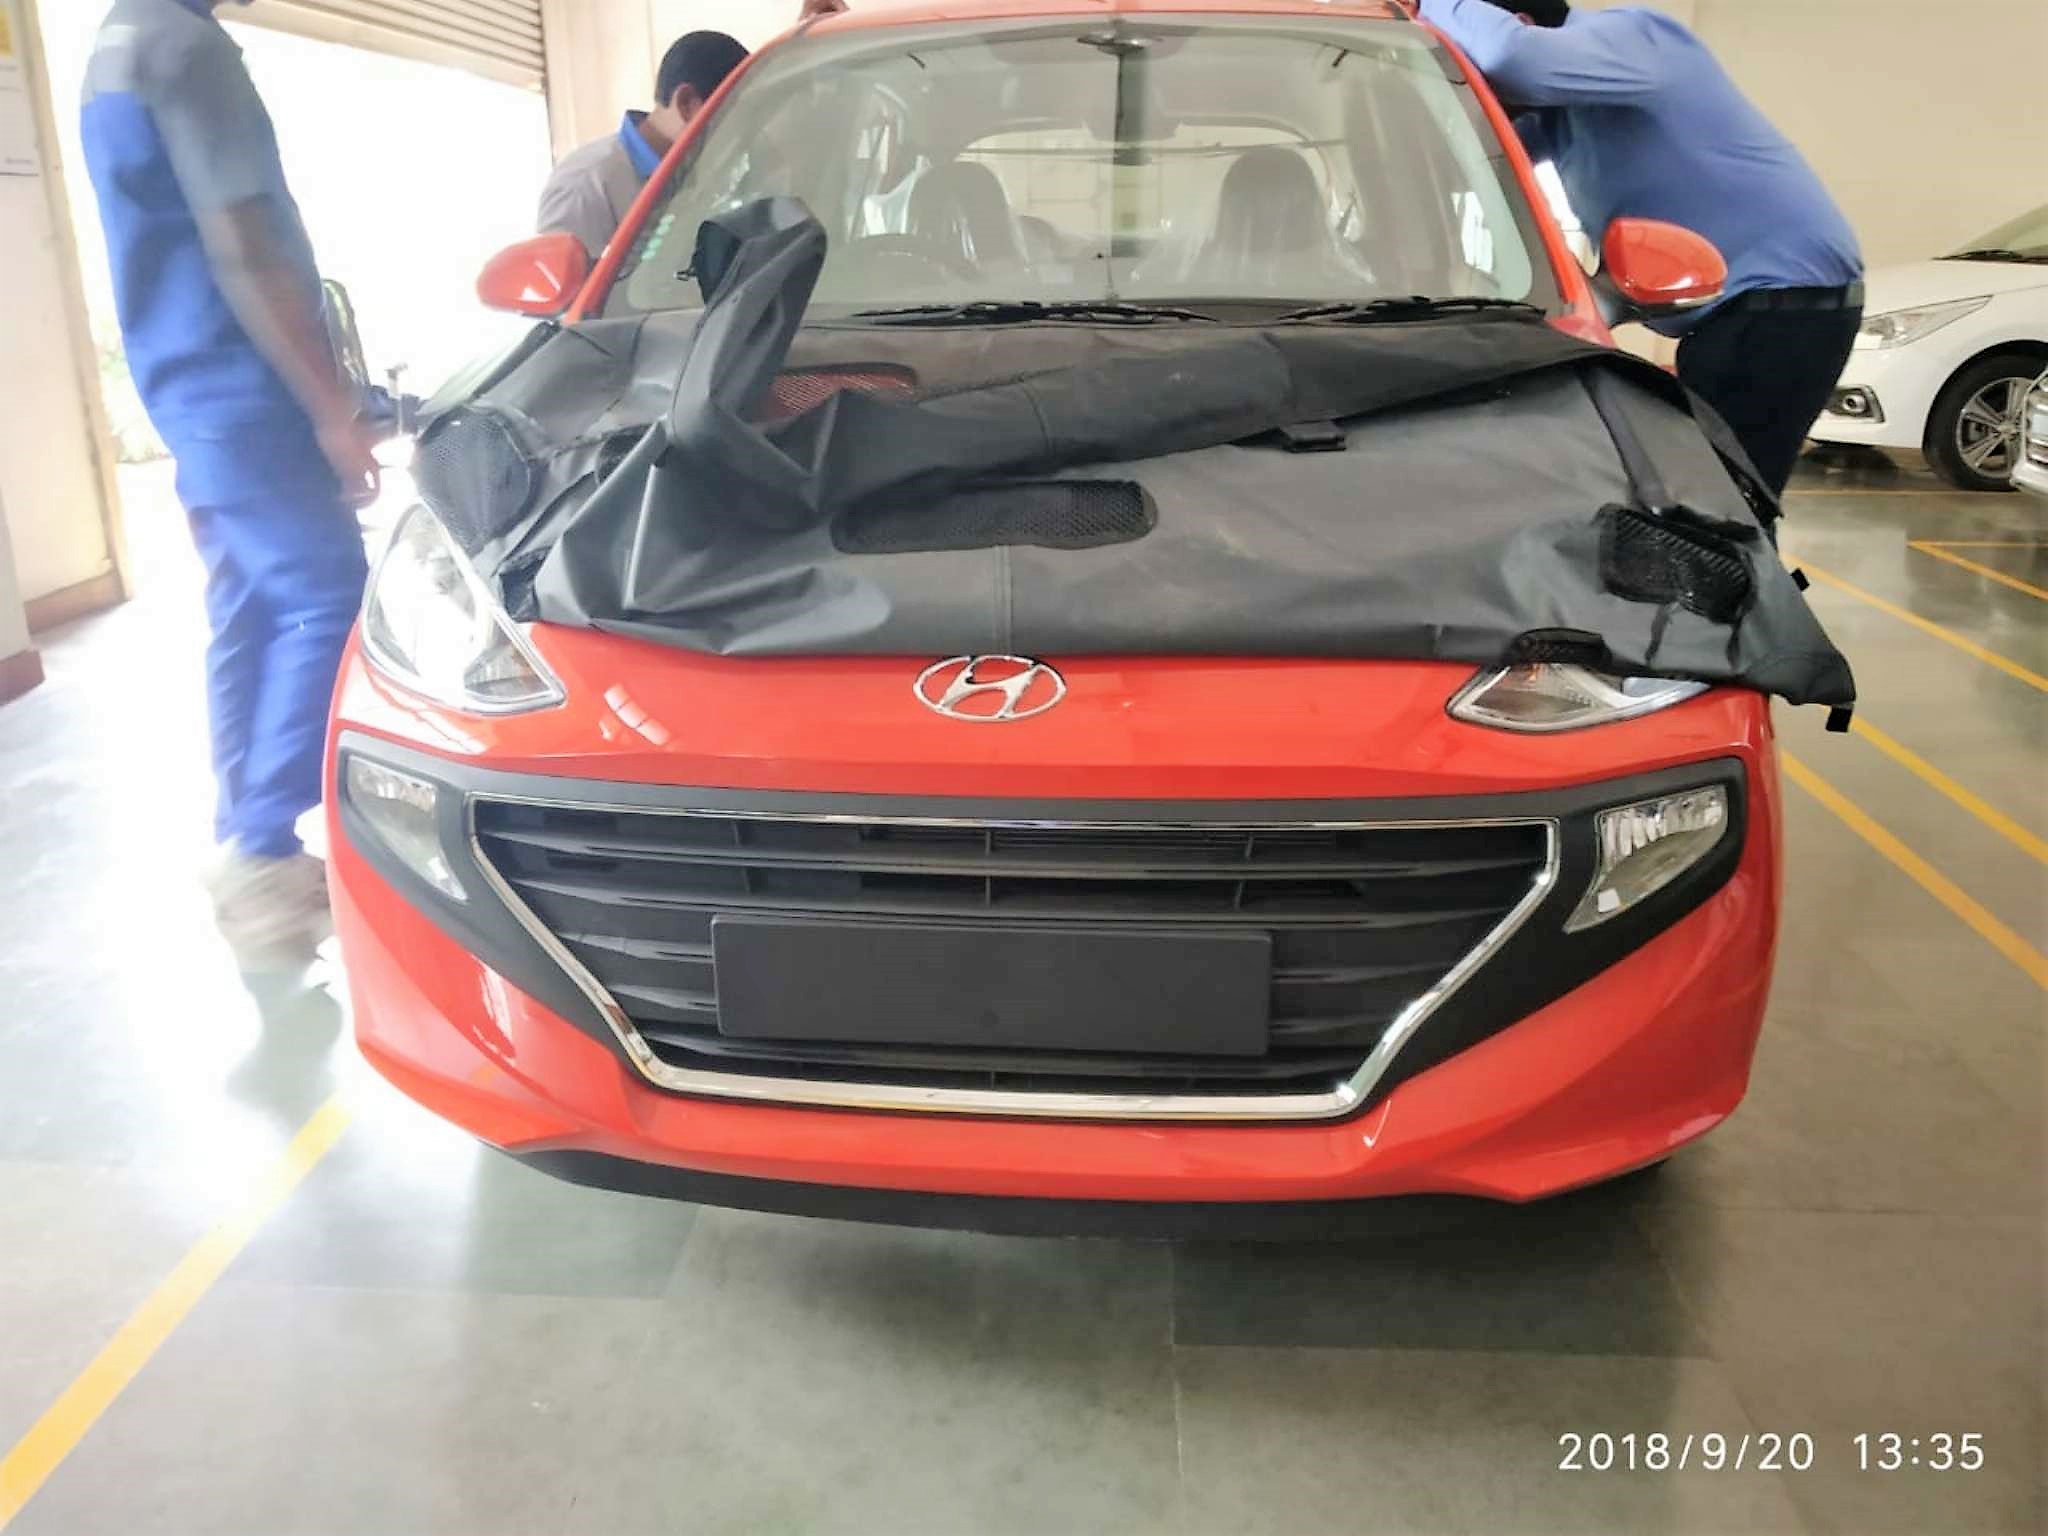 New Hyundai Santro Spotted Undisguised